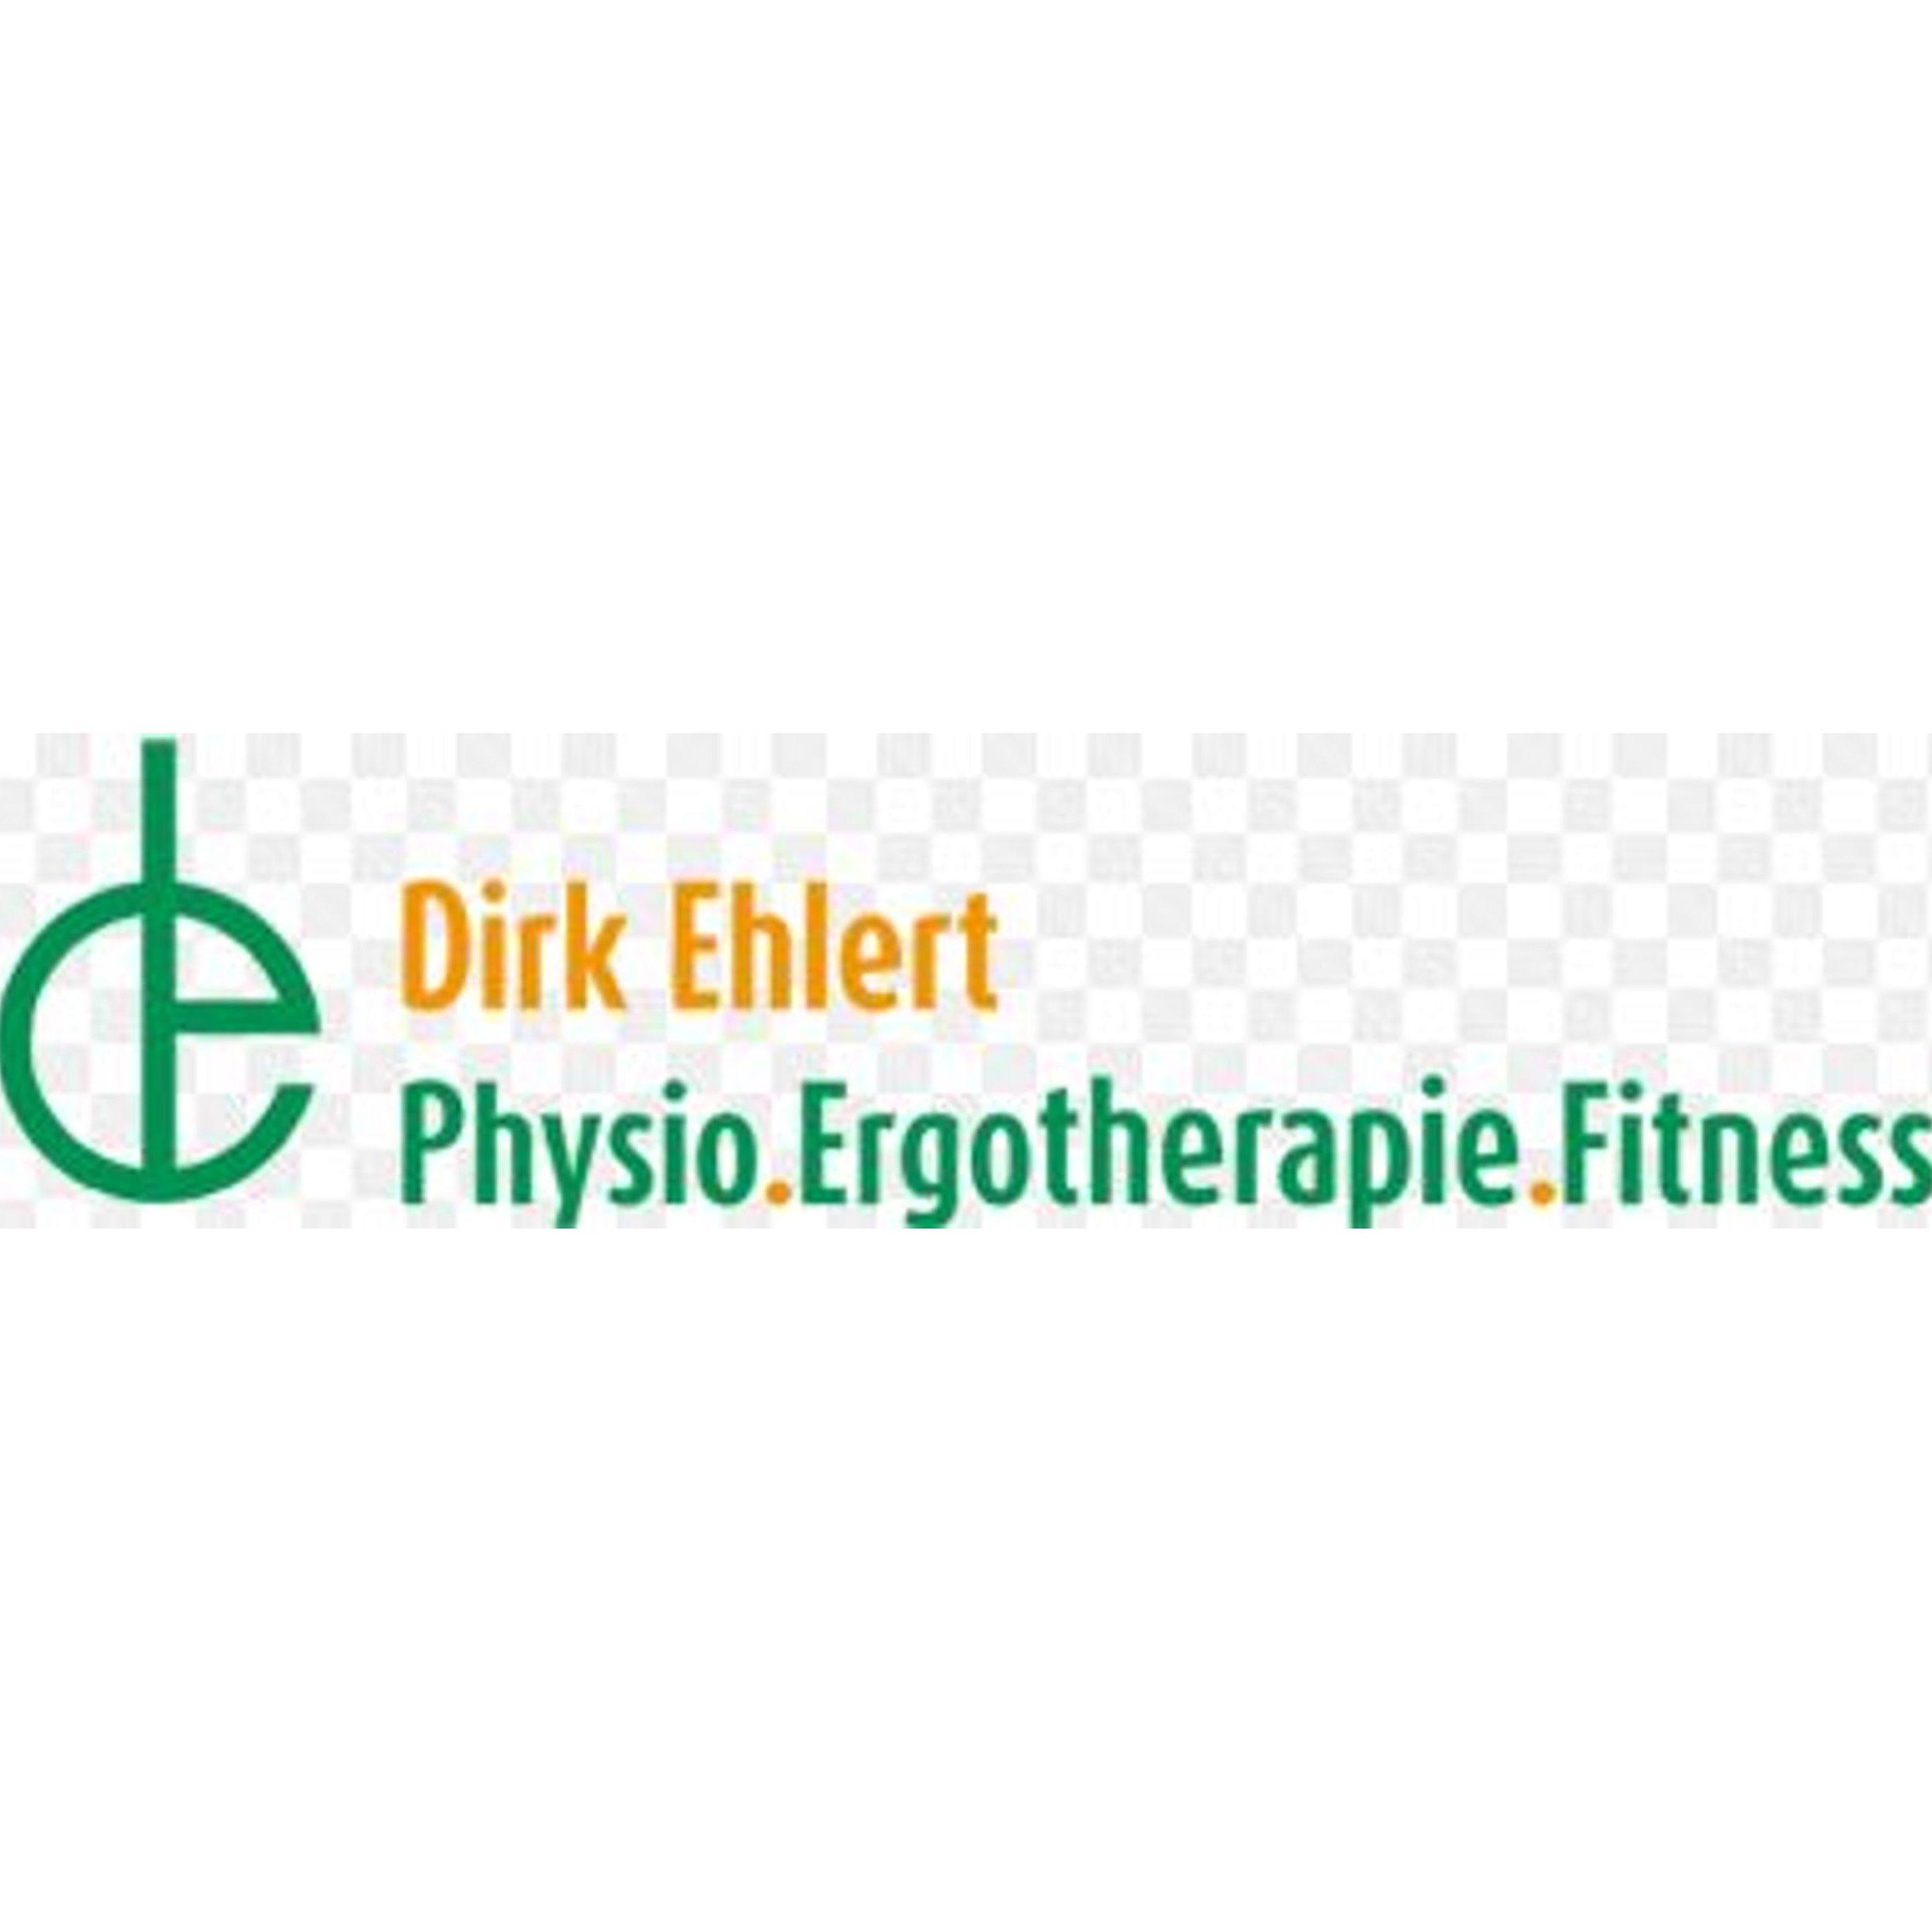 Dirk Ehlert Physio. Ergotherapie. Fitness Logo